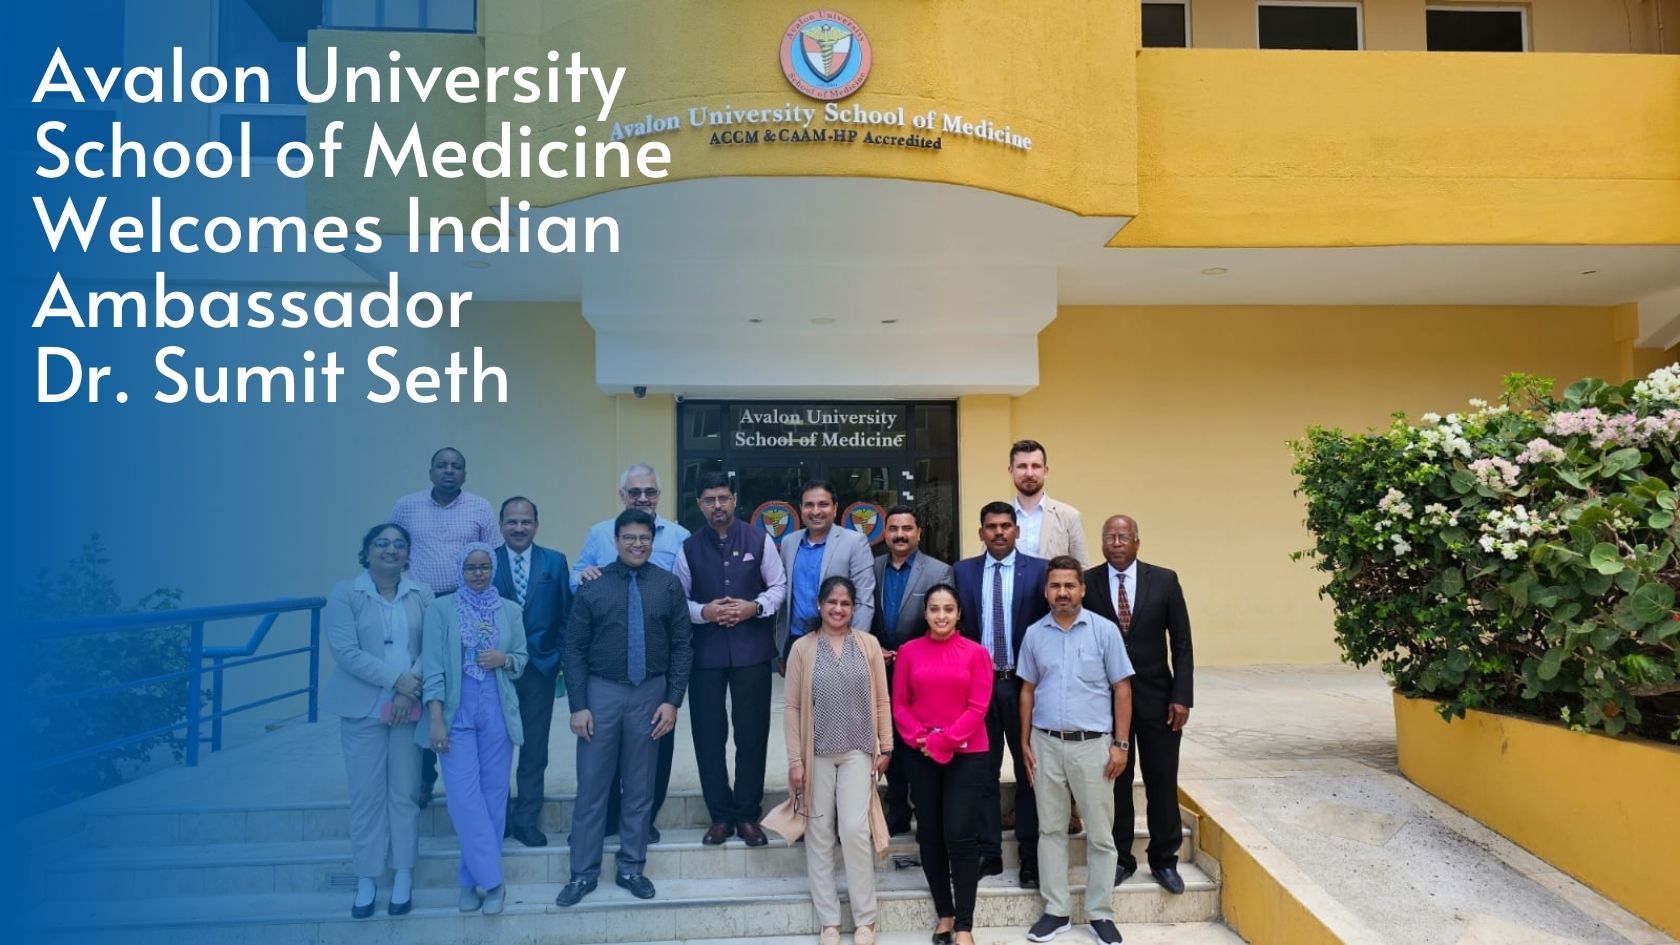 Avalon University School of Medicine Welcomes Indian Ambassador Dr. Sumit Seth